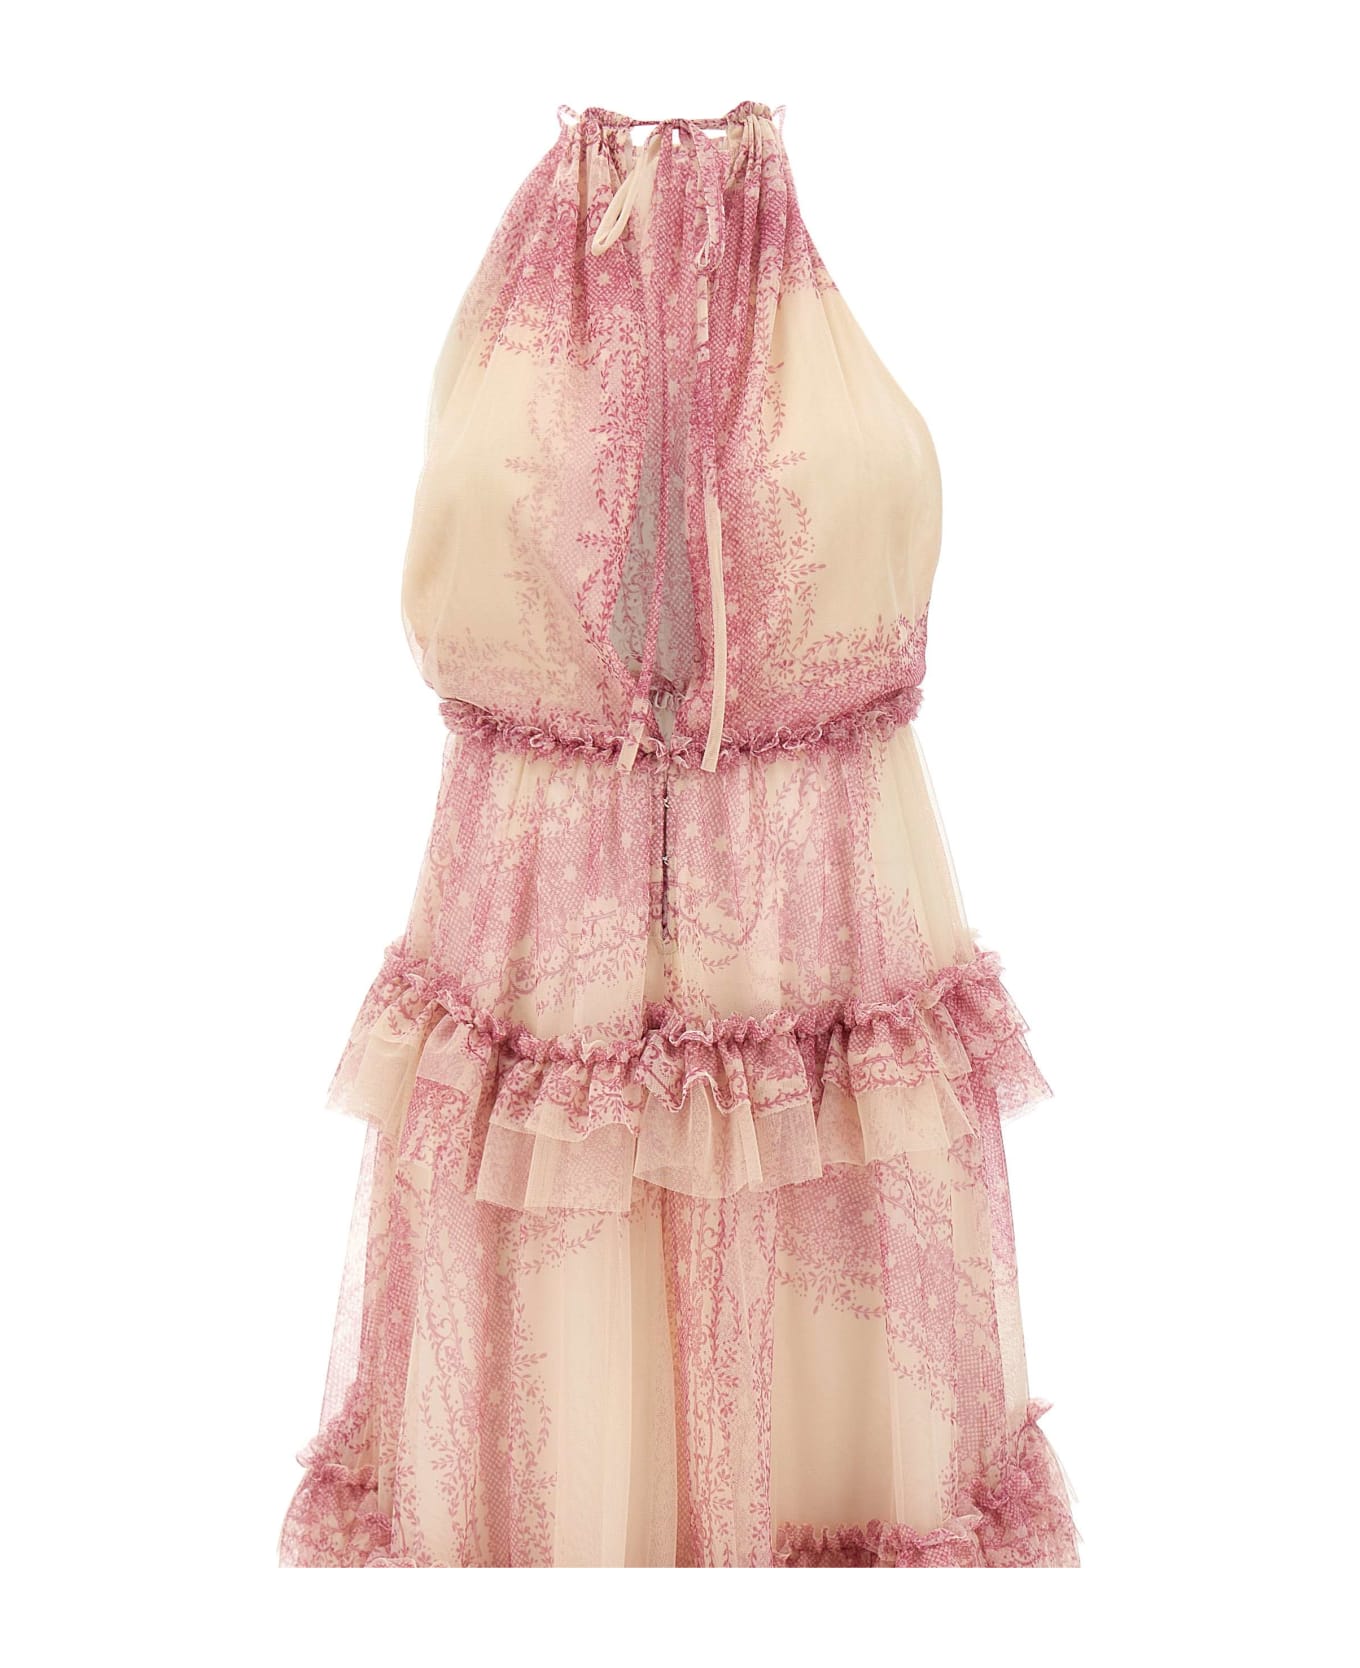 Philosophy di Lorenzo Serafini Tulle Dress - Pink/Beige